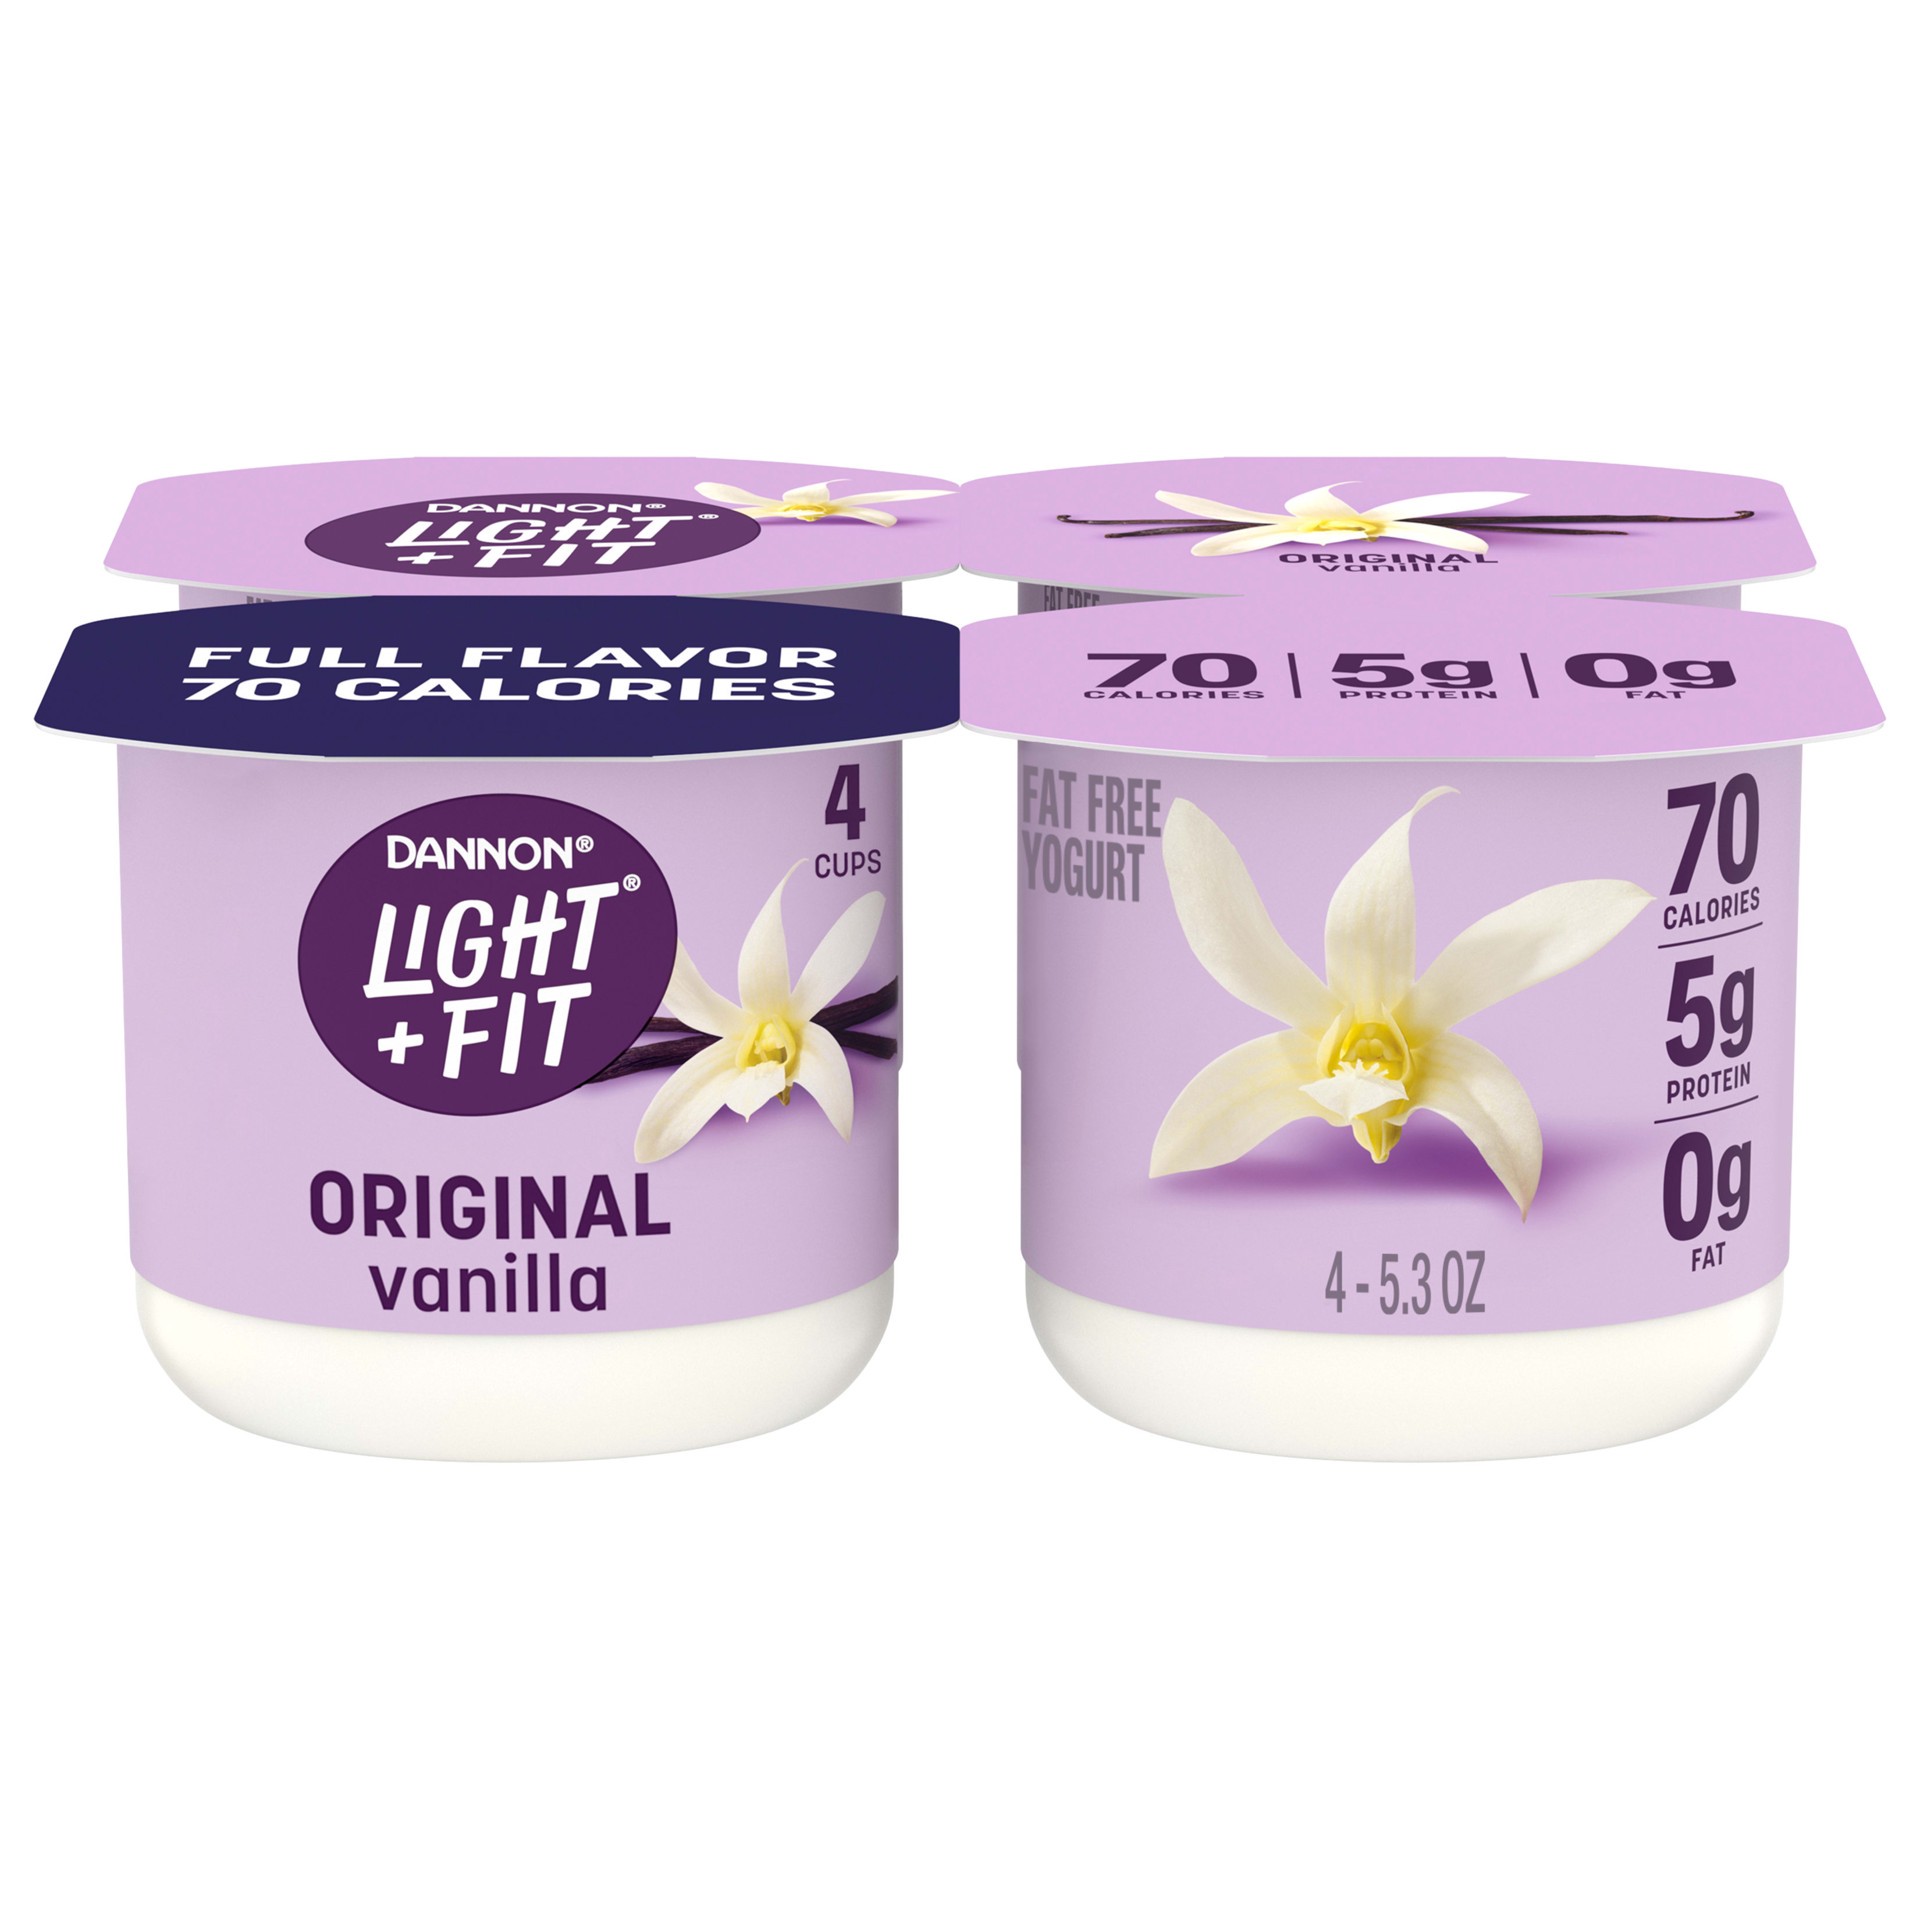 slide 1 of 5, Light + Fit Dannon Light + Fit Vanilla Original Nonfat Yogurt Pack, 0 Fat and 70 Calories, Creamy and Delicious Vanilla Yogurt, 4 Ct, 5.3 OZ Cups, 21.2 fl oz